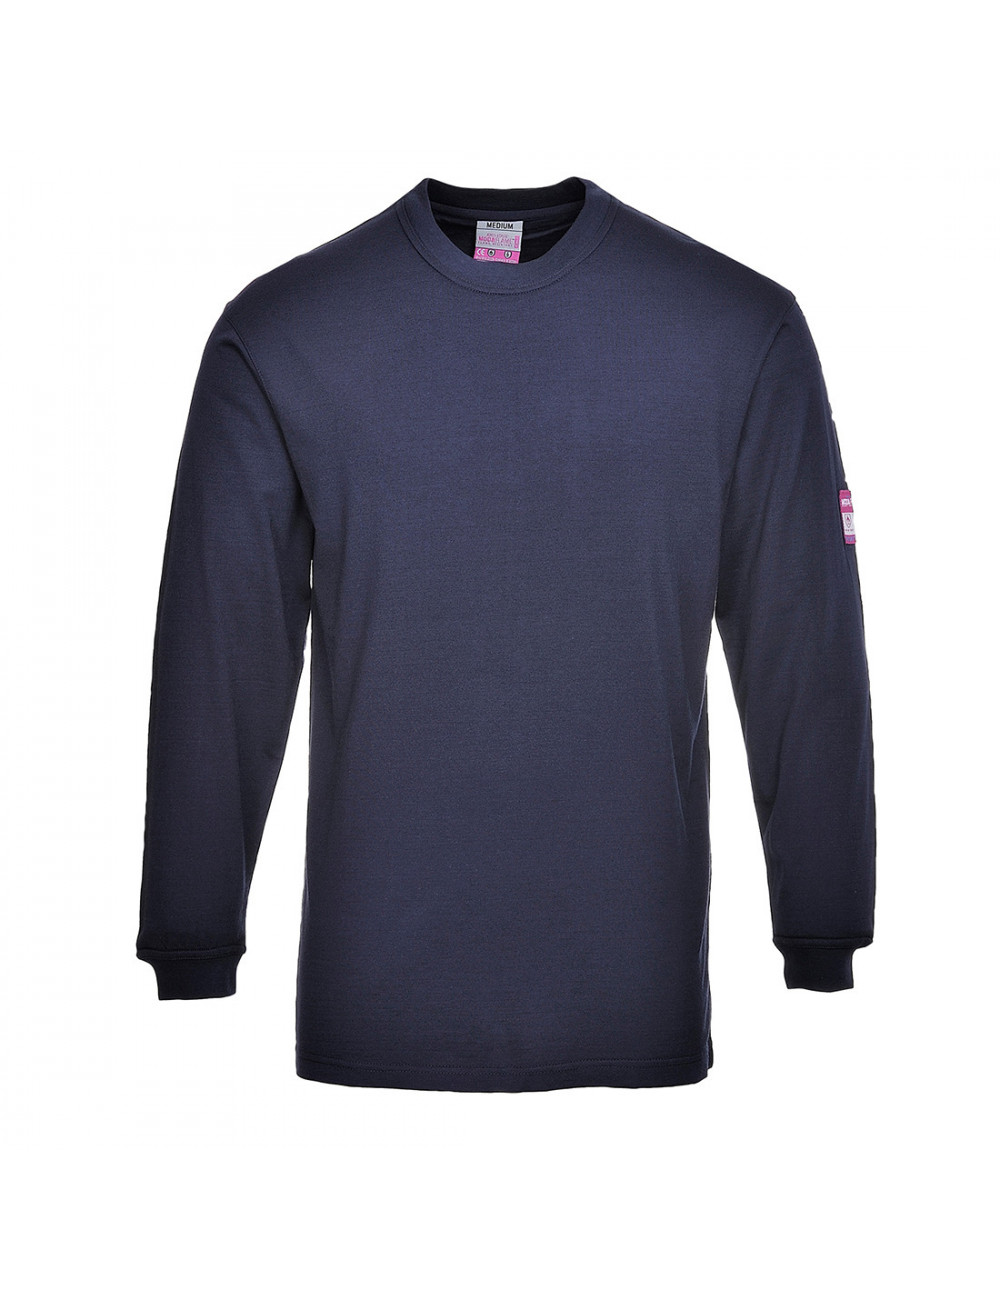 Antistatic flame retardant long sleeve t-shirt navy Portwest